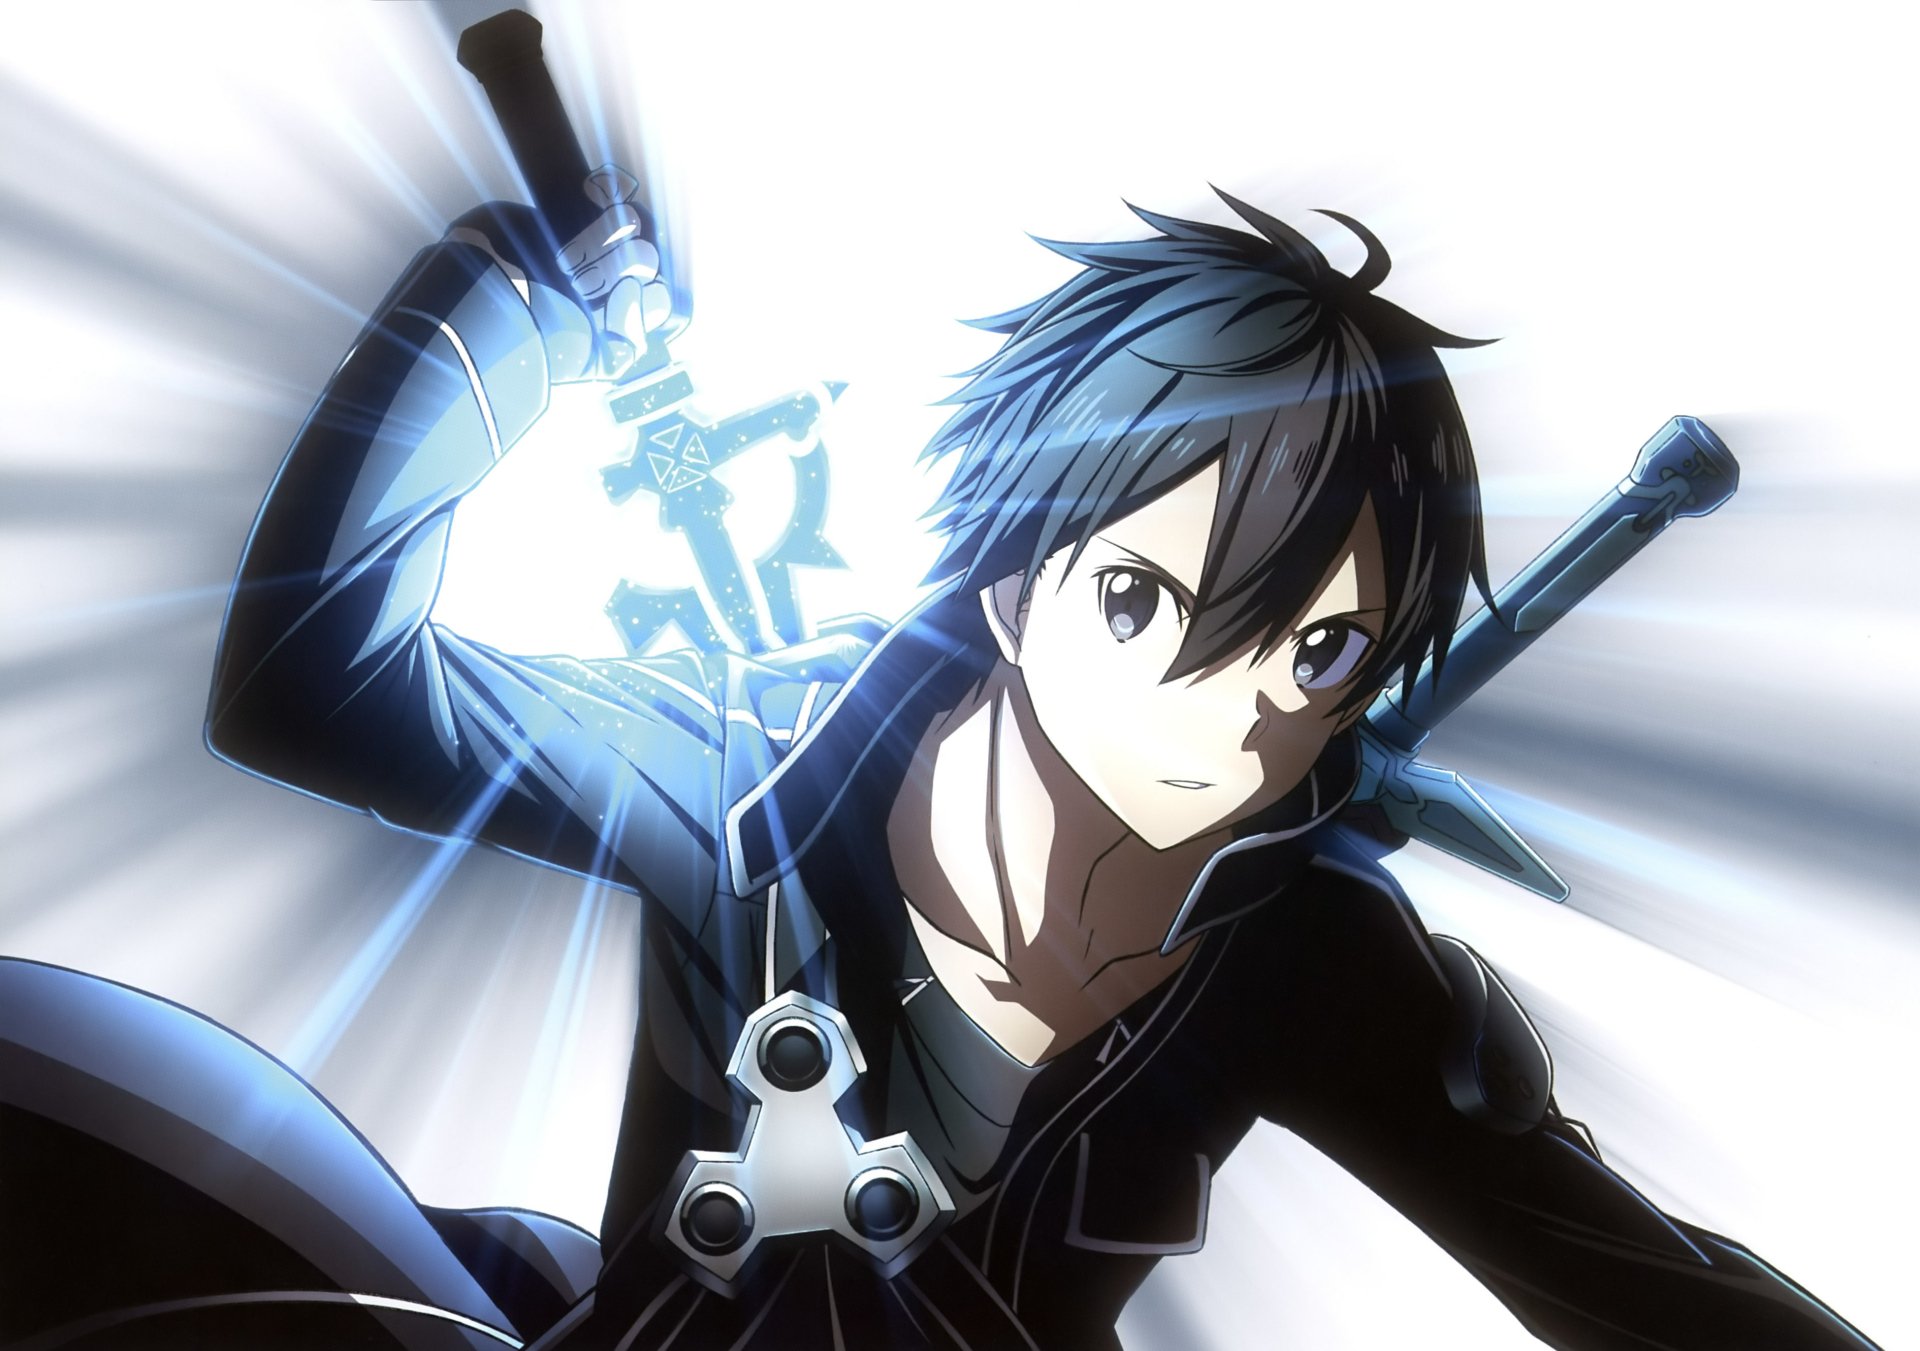 Download Kazuto Kirigaya Kirito Sword Art Online Anime Sword Art Online Hd Wallpaper